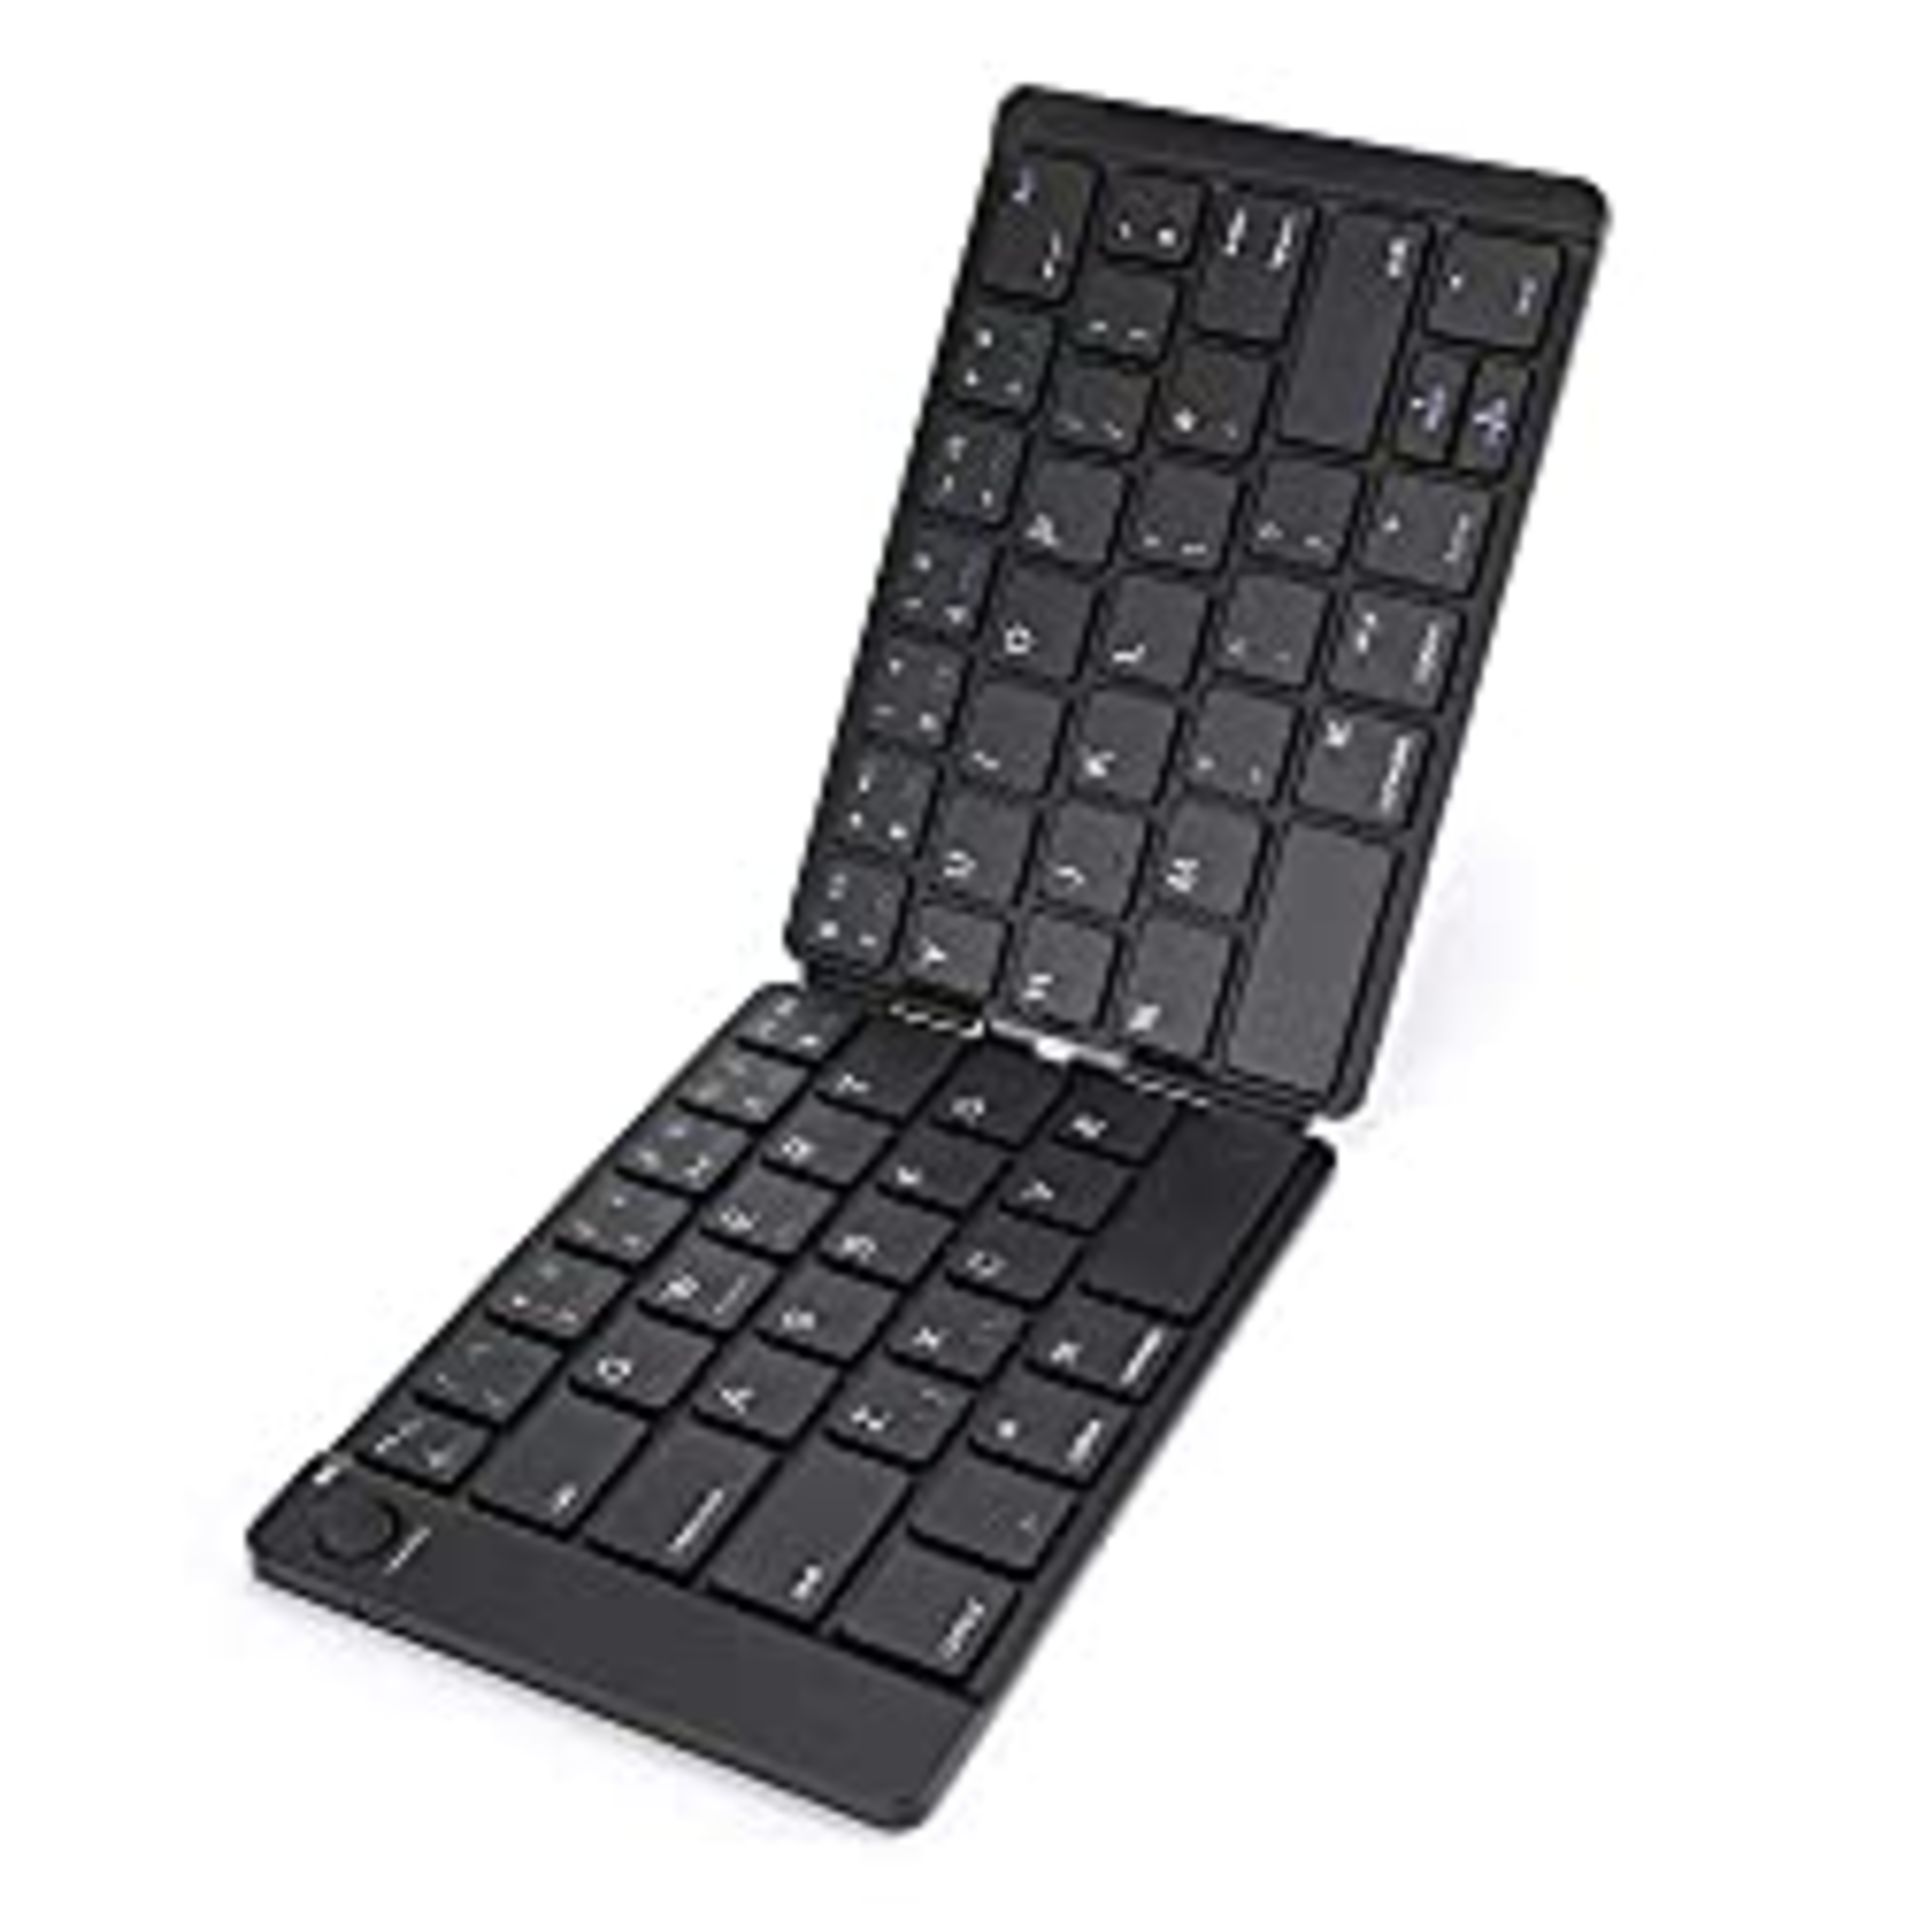 RRP £28.99 Folding Keyboard Portable Bluetooth Keyboard Joyzy